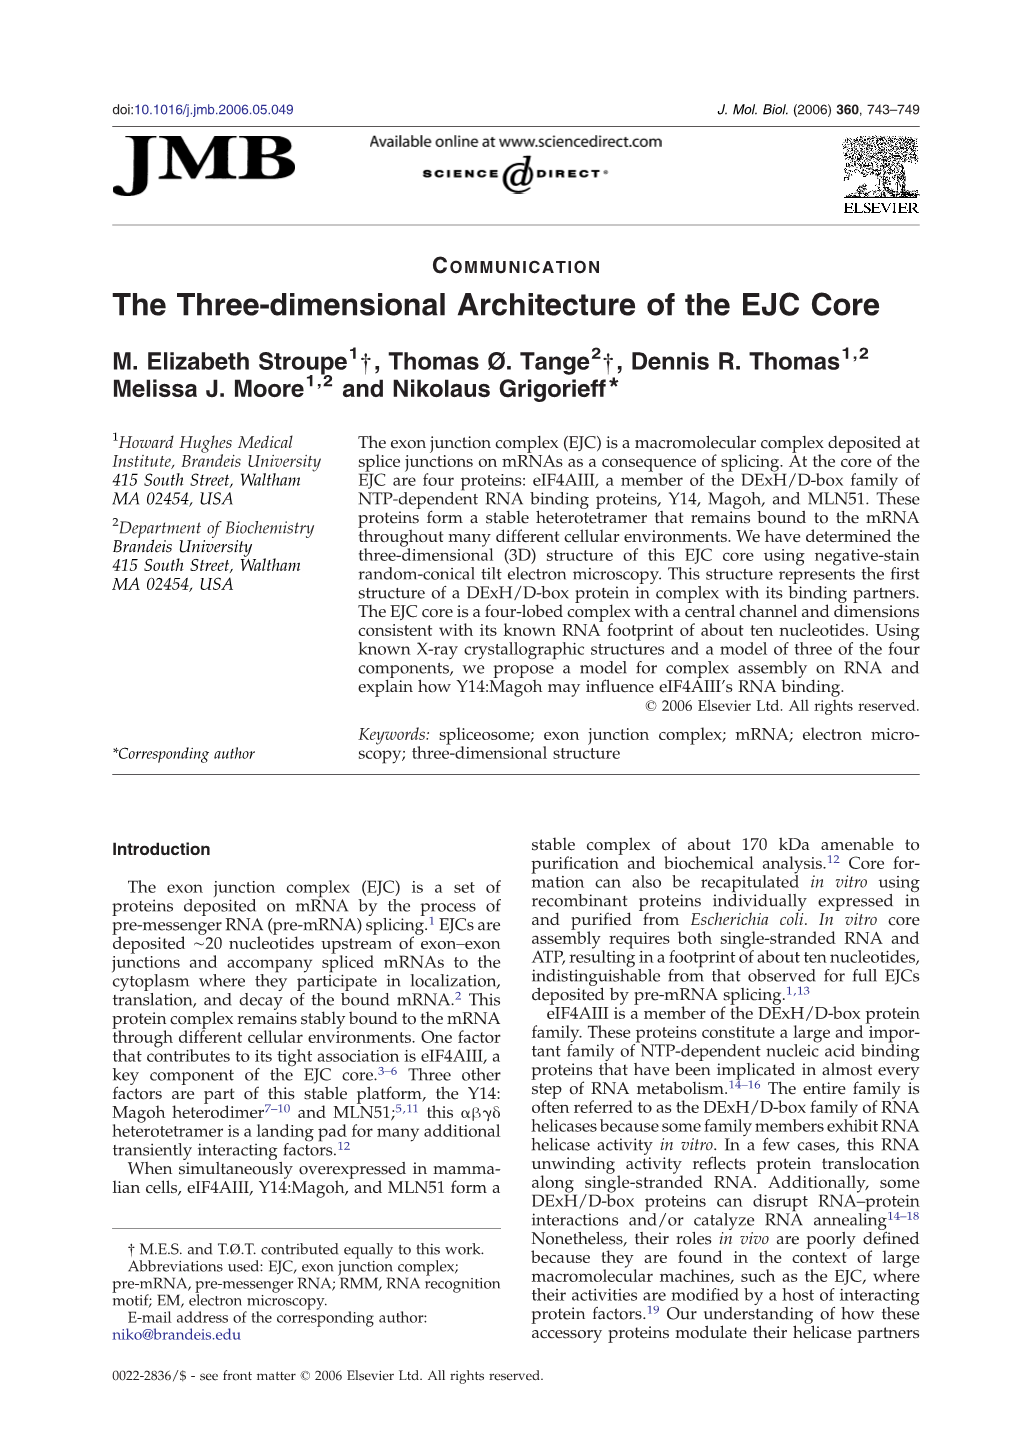 The Three-Dimensional Architecture of the EJC Core